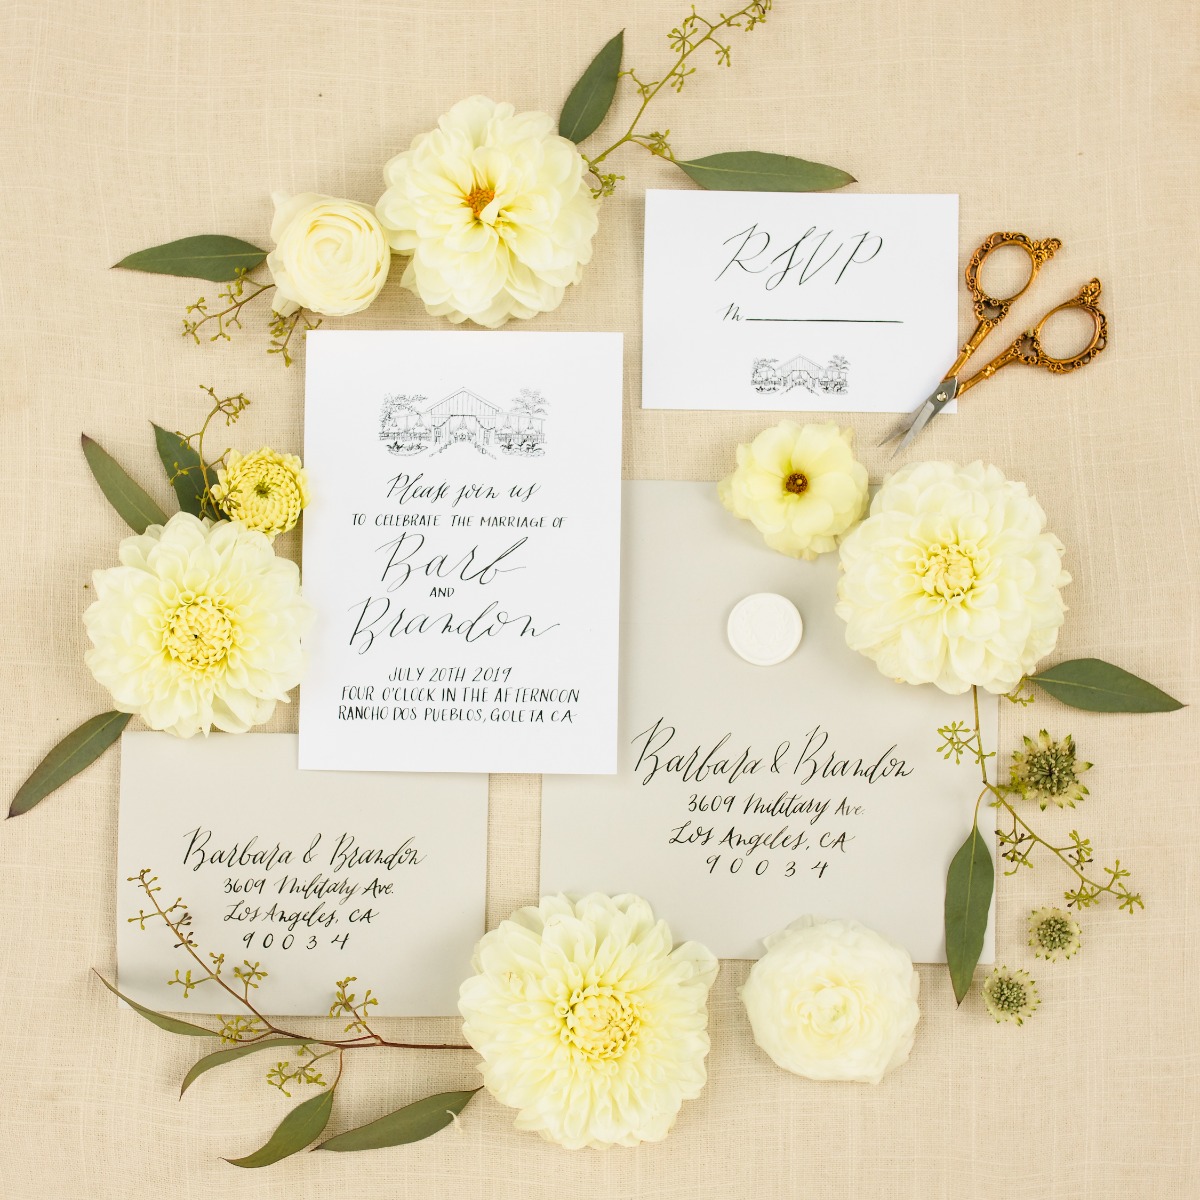 Calligraphy wedding invitations by Jessica Yee Calligraphy